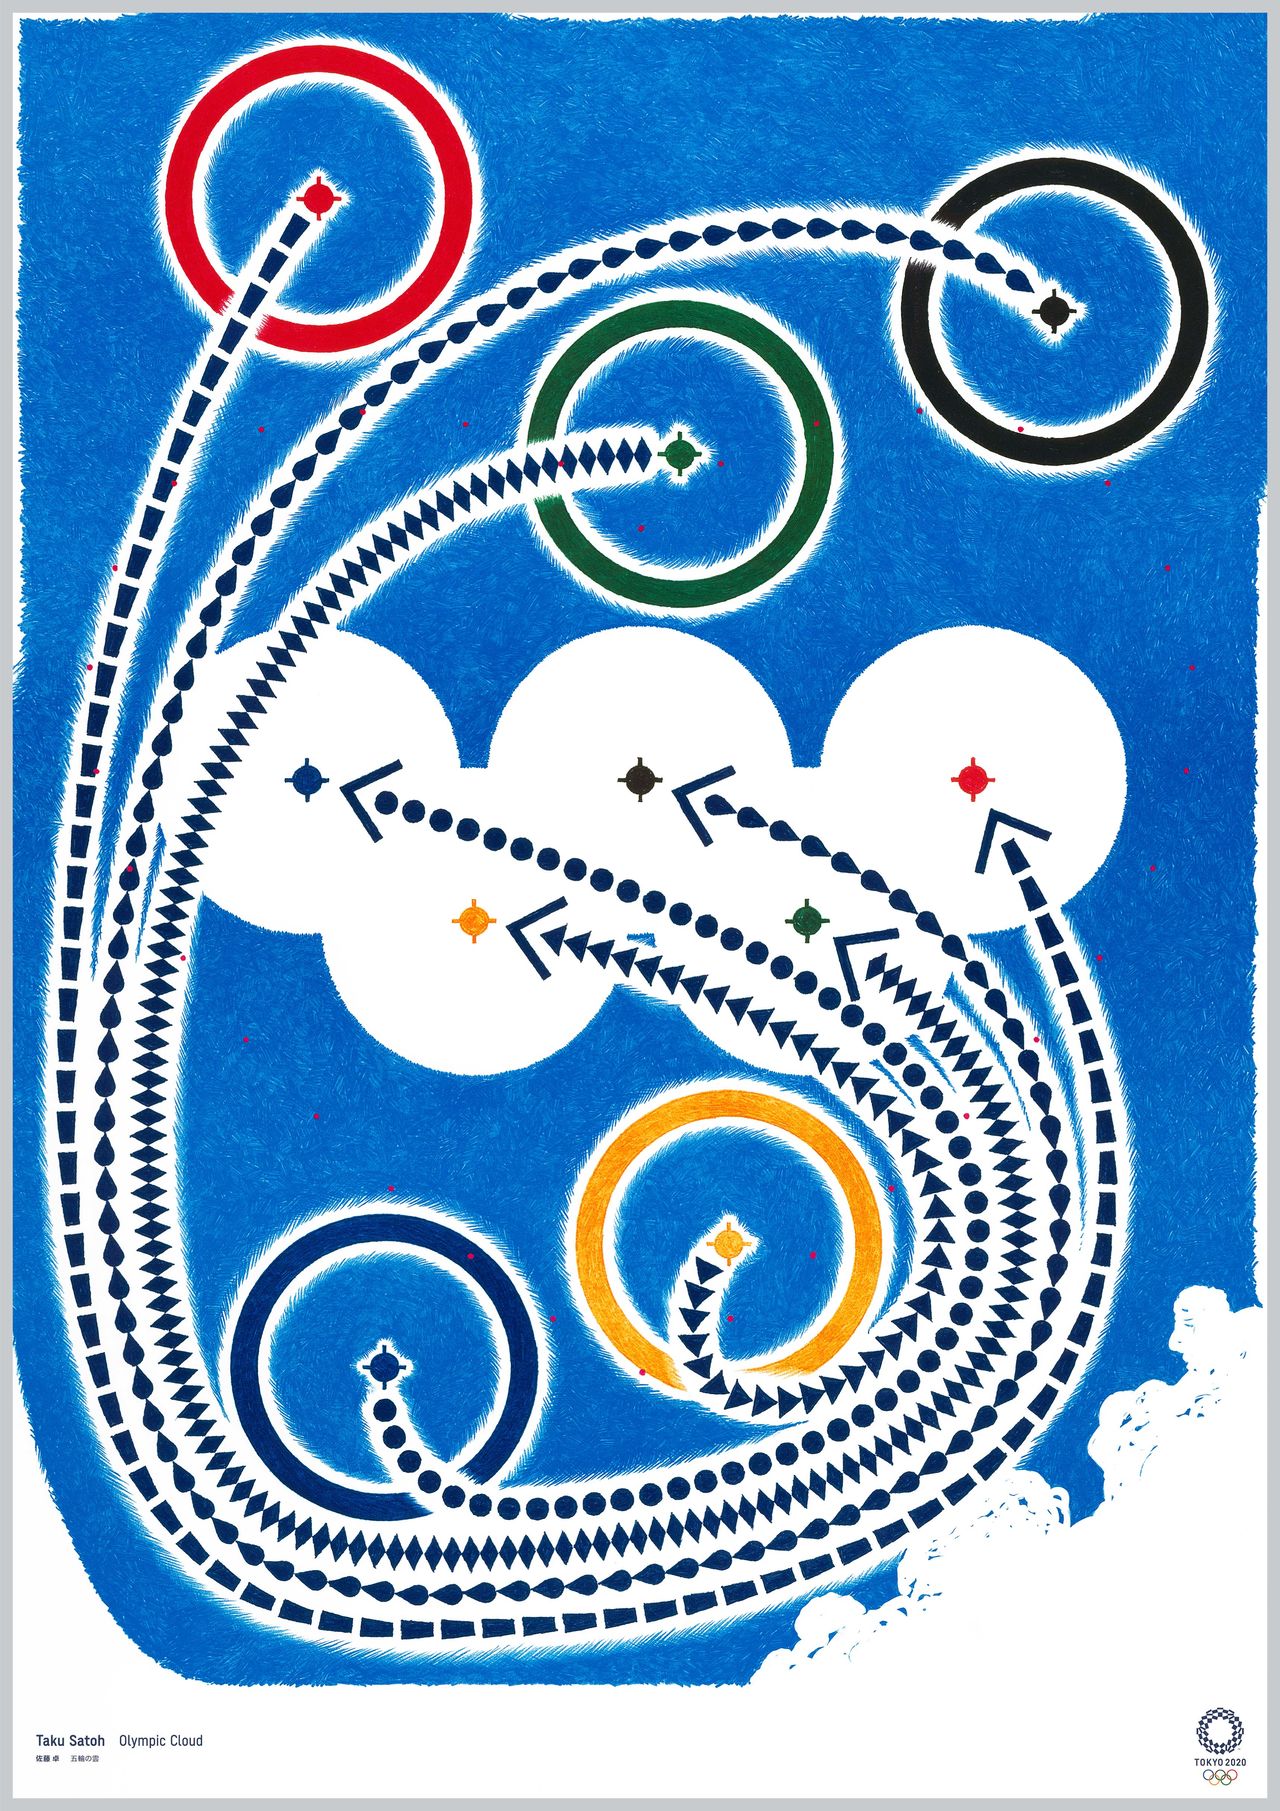 Satō Taku, Olympic Cloud